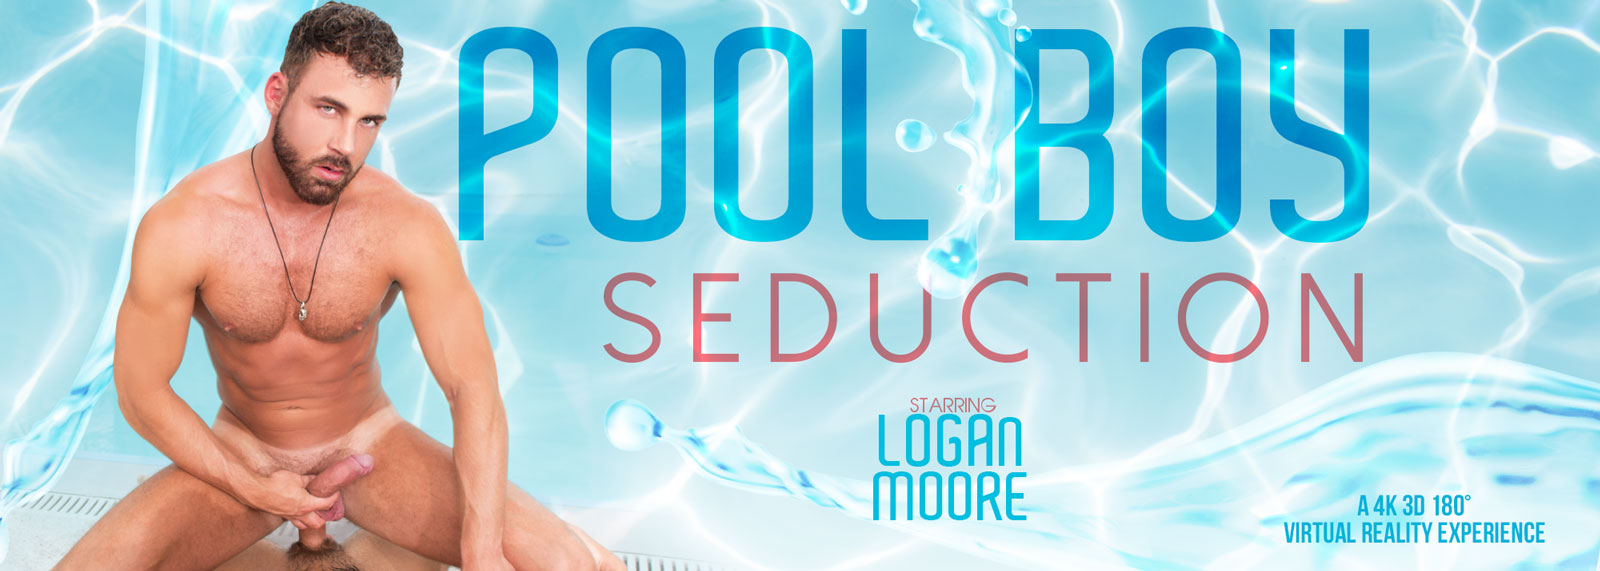 Pool Boy Seduction - Gay VR Porn Video, Starring: Logan Moore